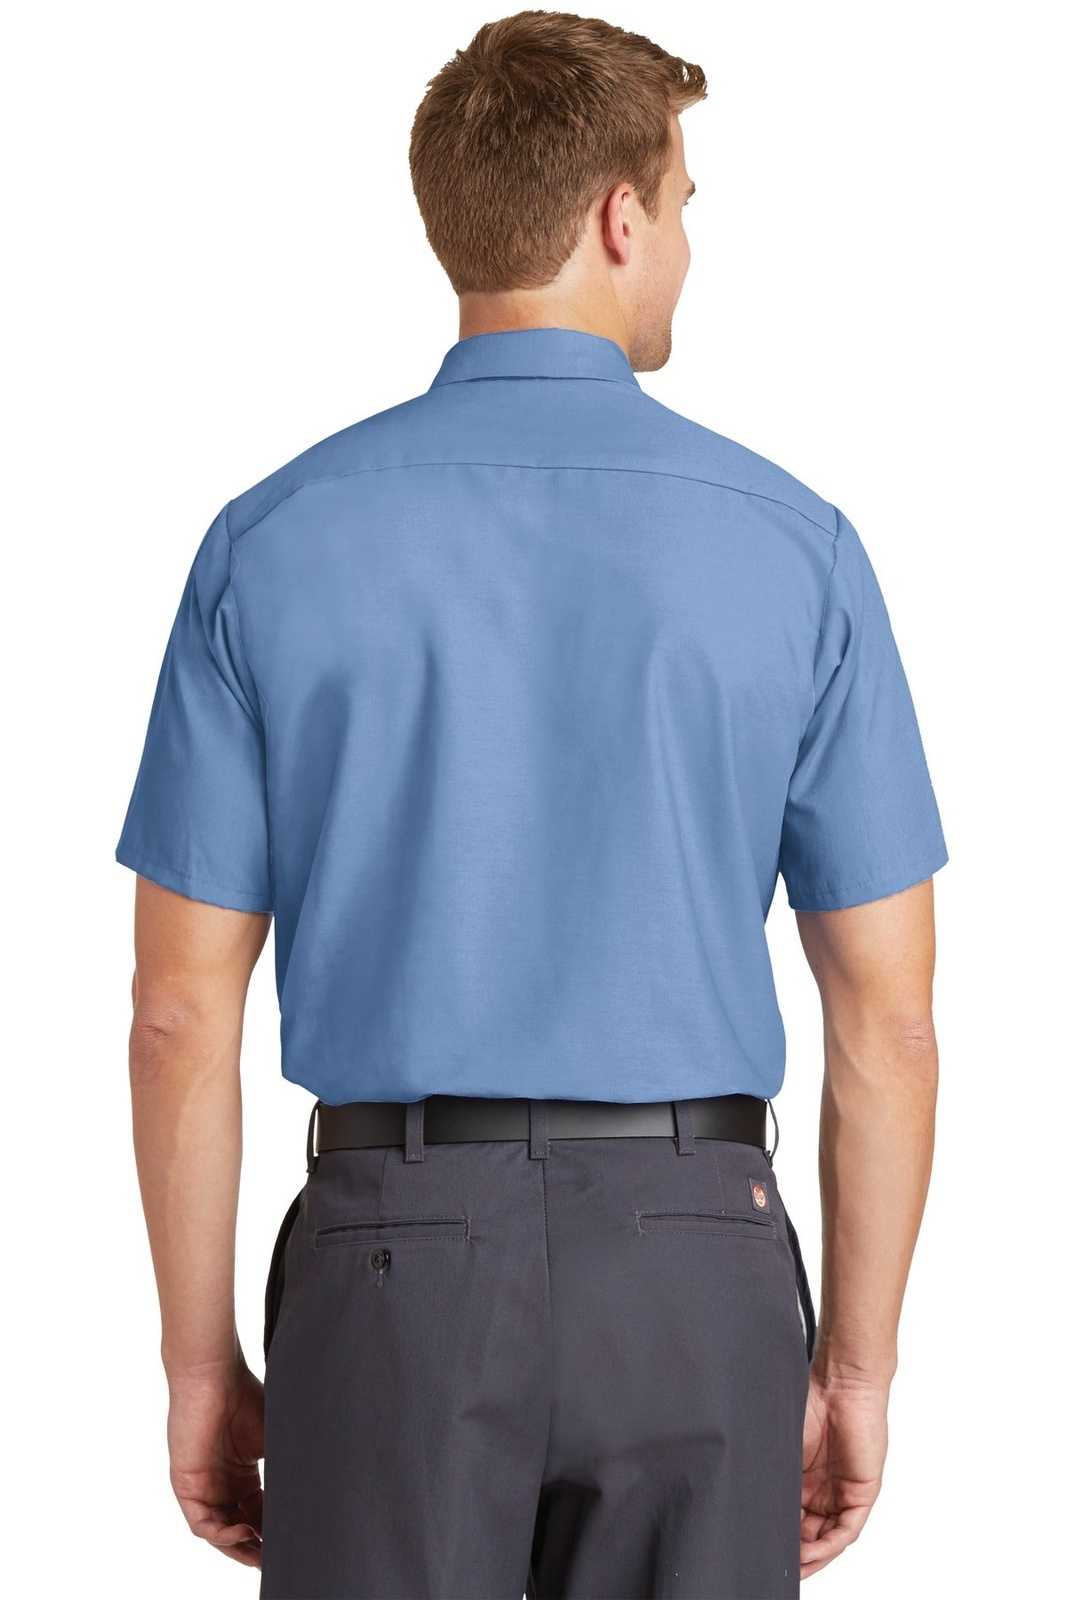 Red Kap SP24 Short Sleeve Industrial Work Shirt - Petrol Blue - HIT a Double - 1